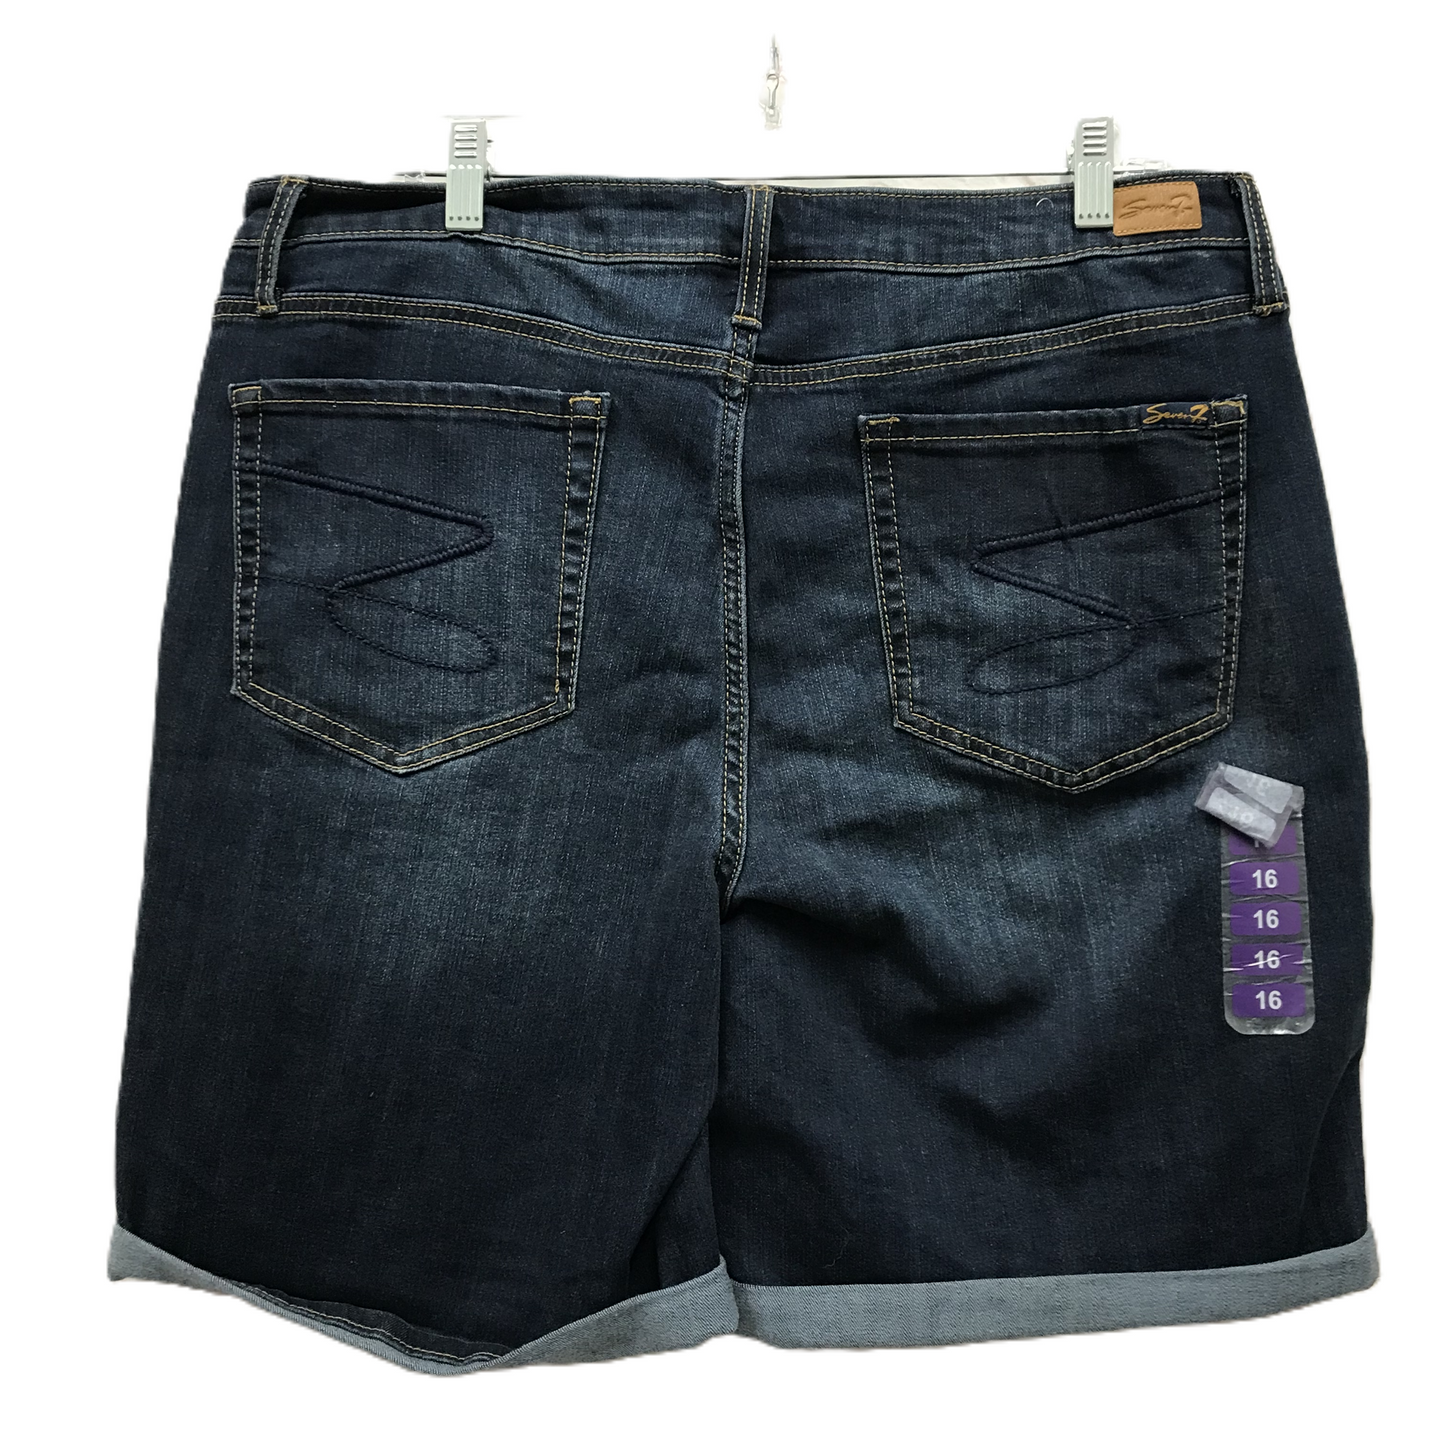 Blue Denim Shorts By Seven 7, Size: 16